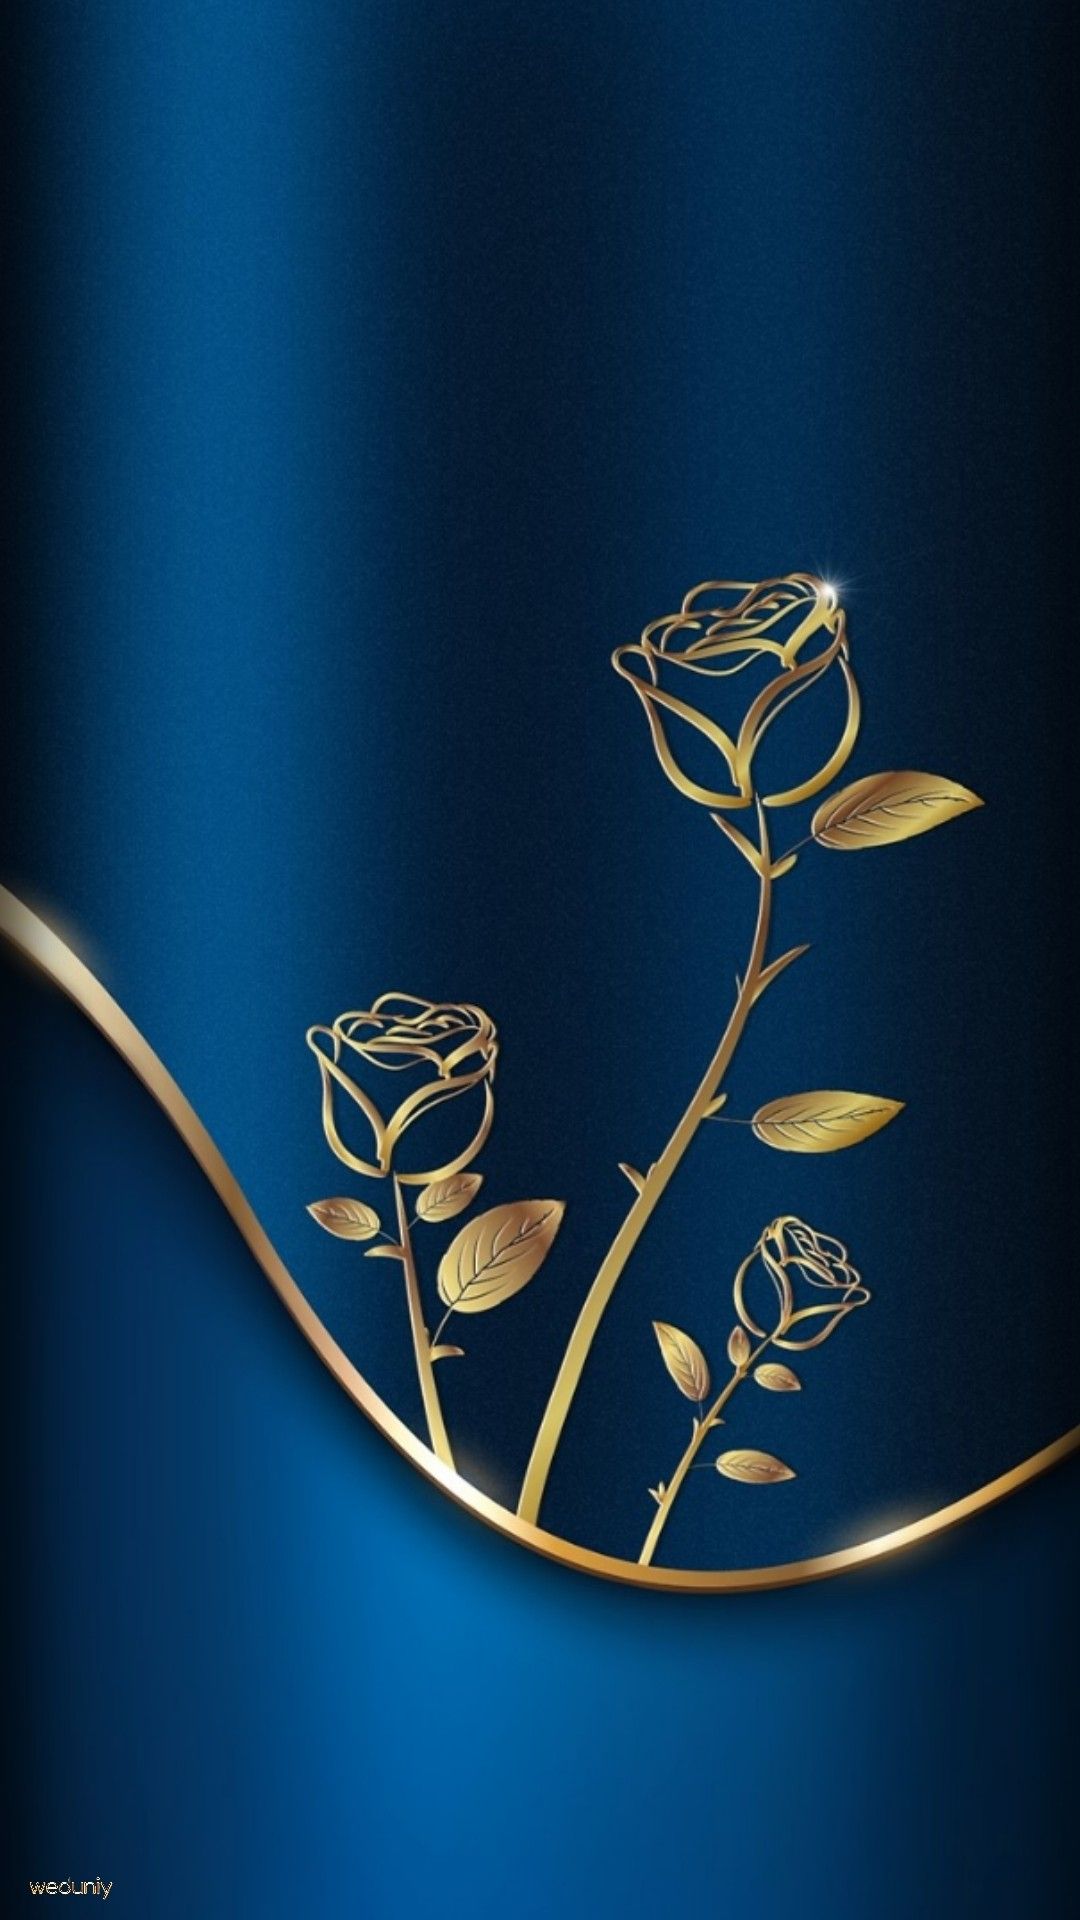 Wallpaper / Blue / Gold roses. Background phone wallpaper, Blue